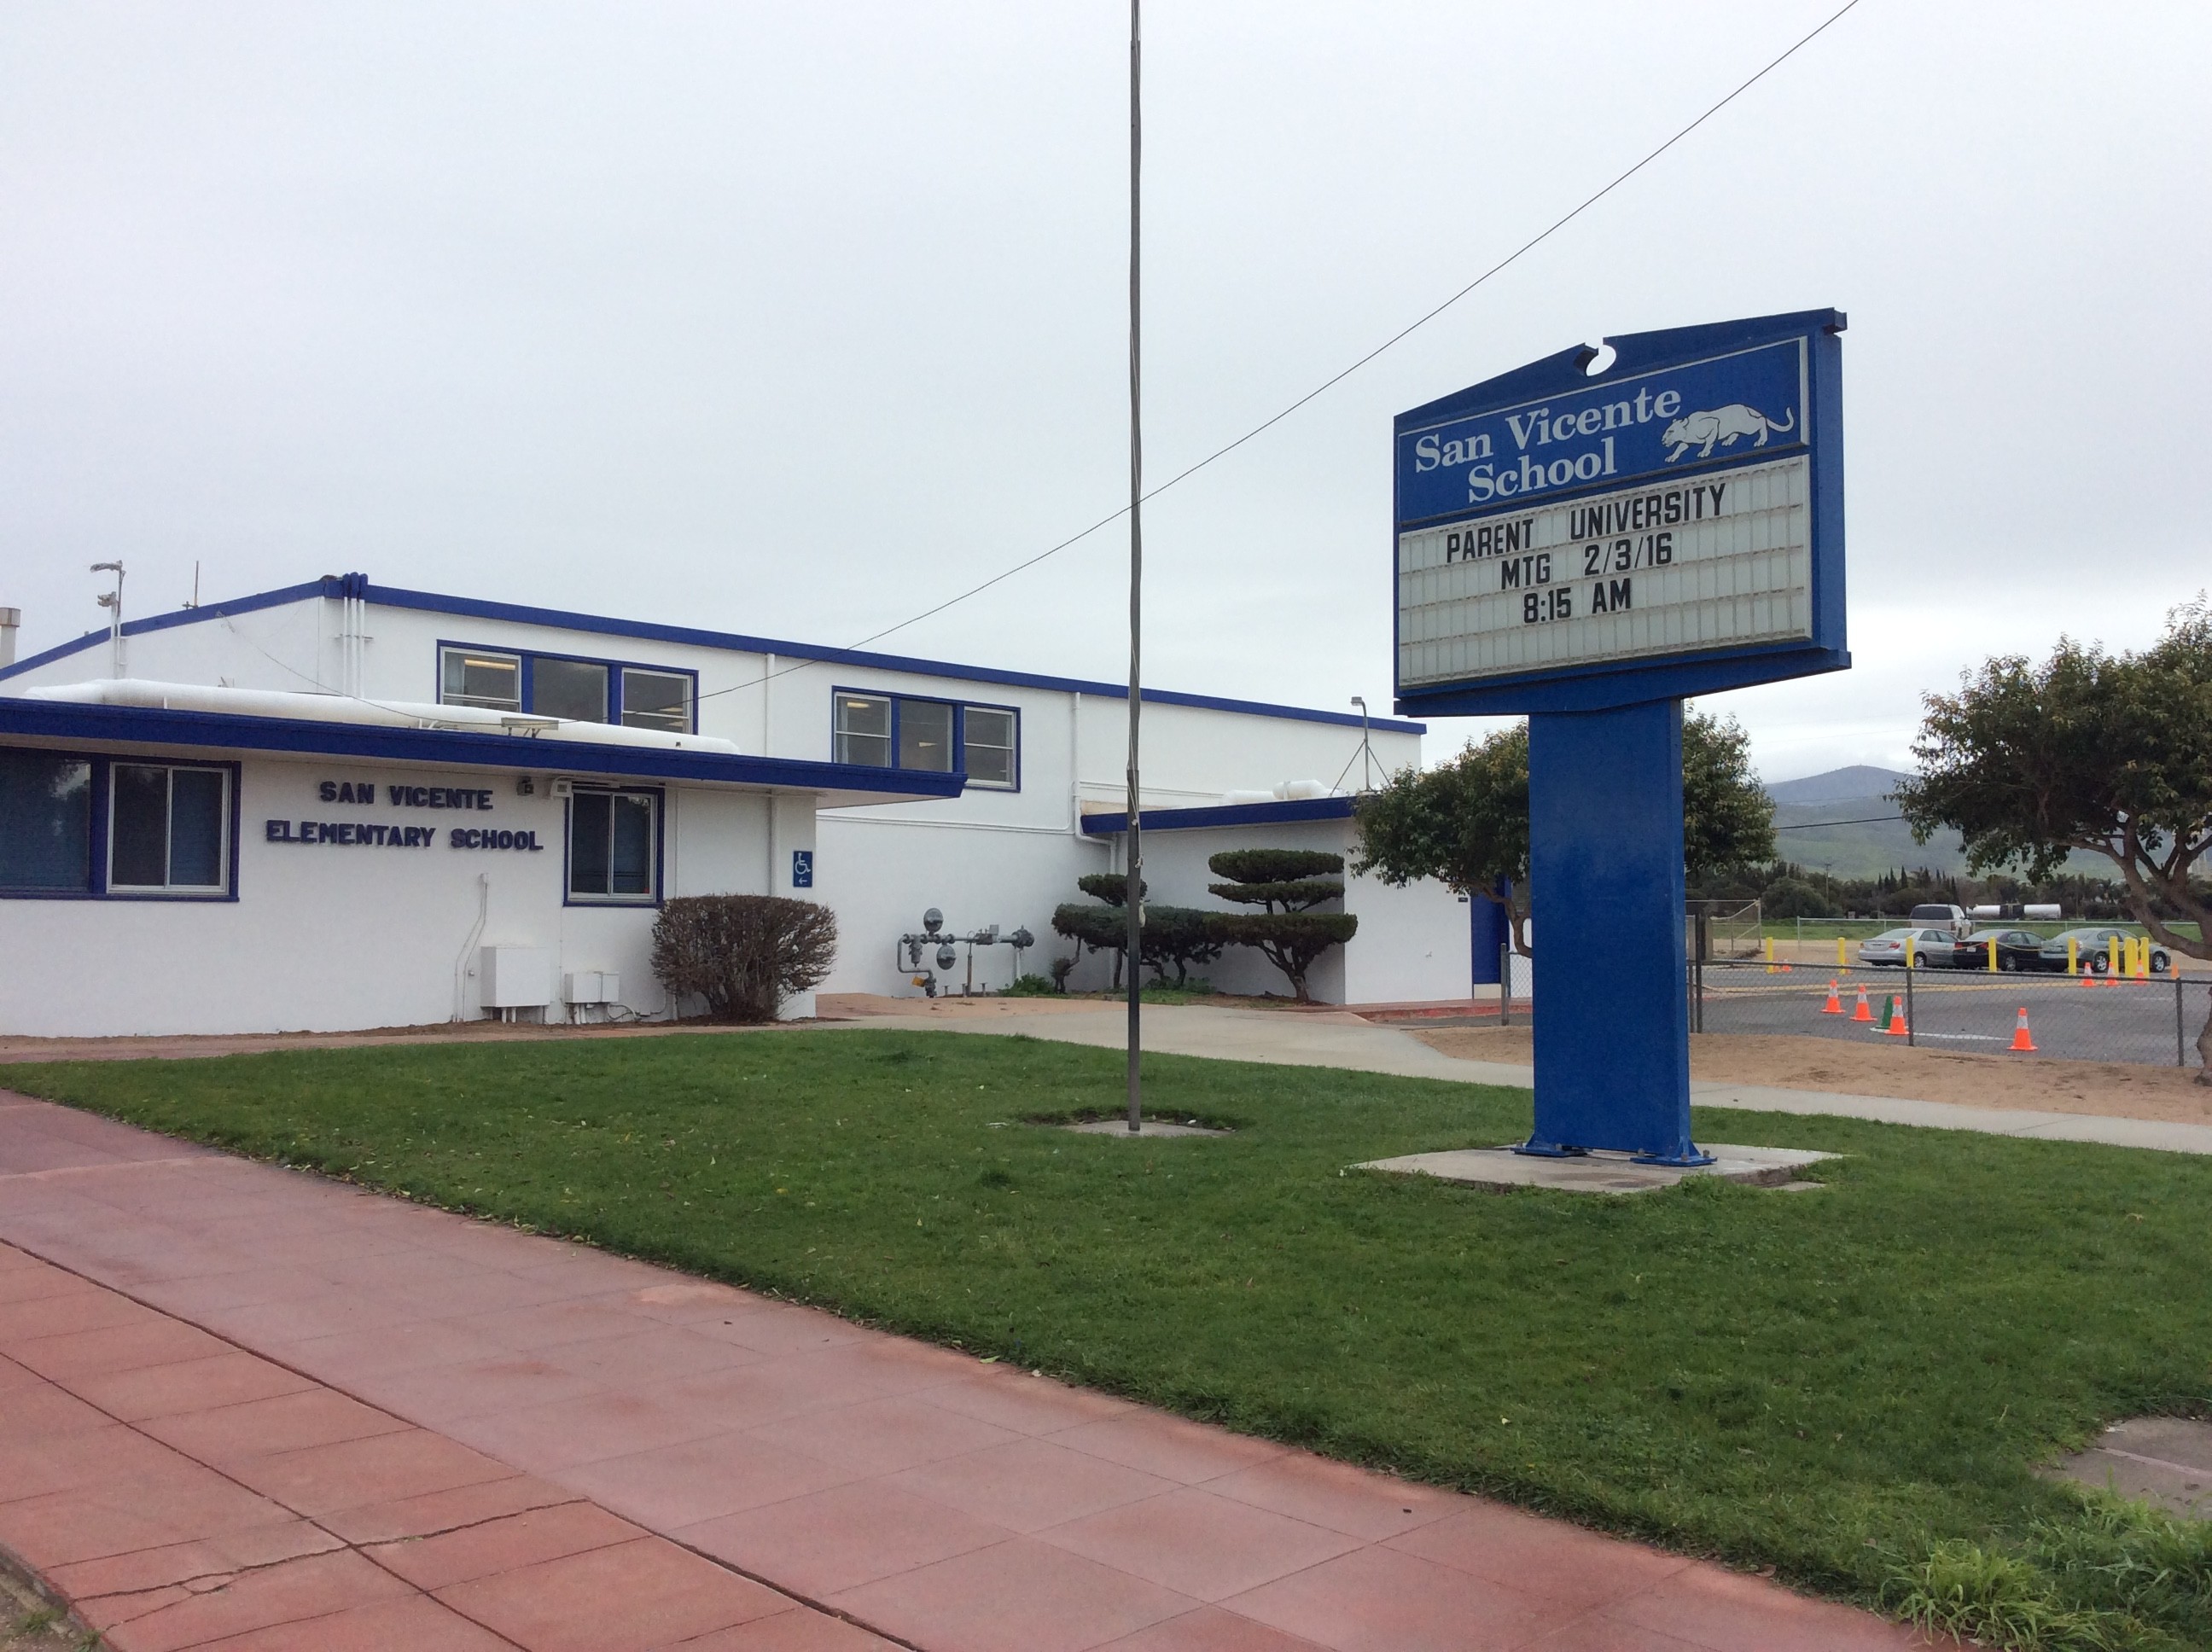 San Vicente Elementary School